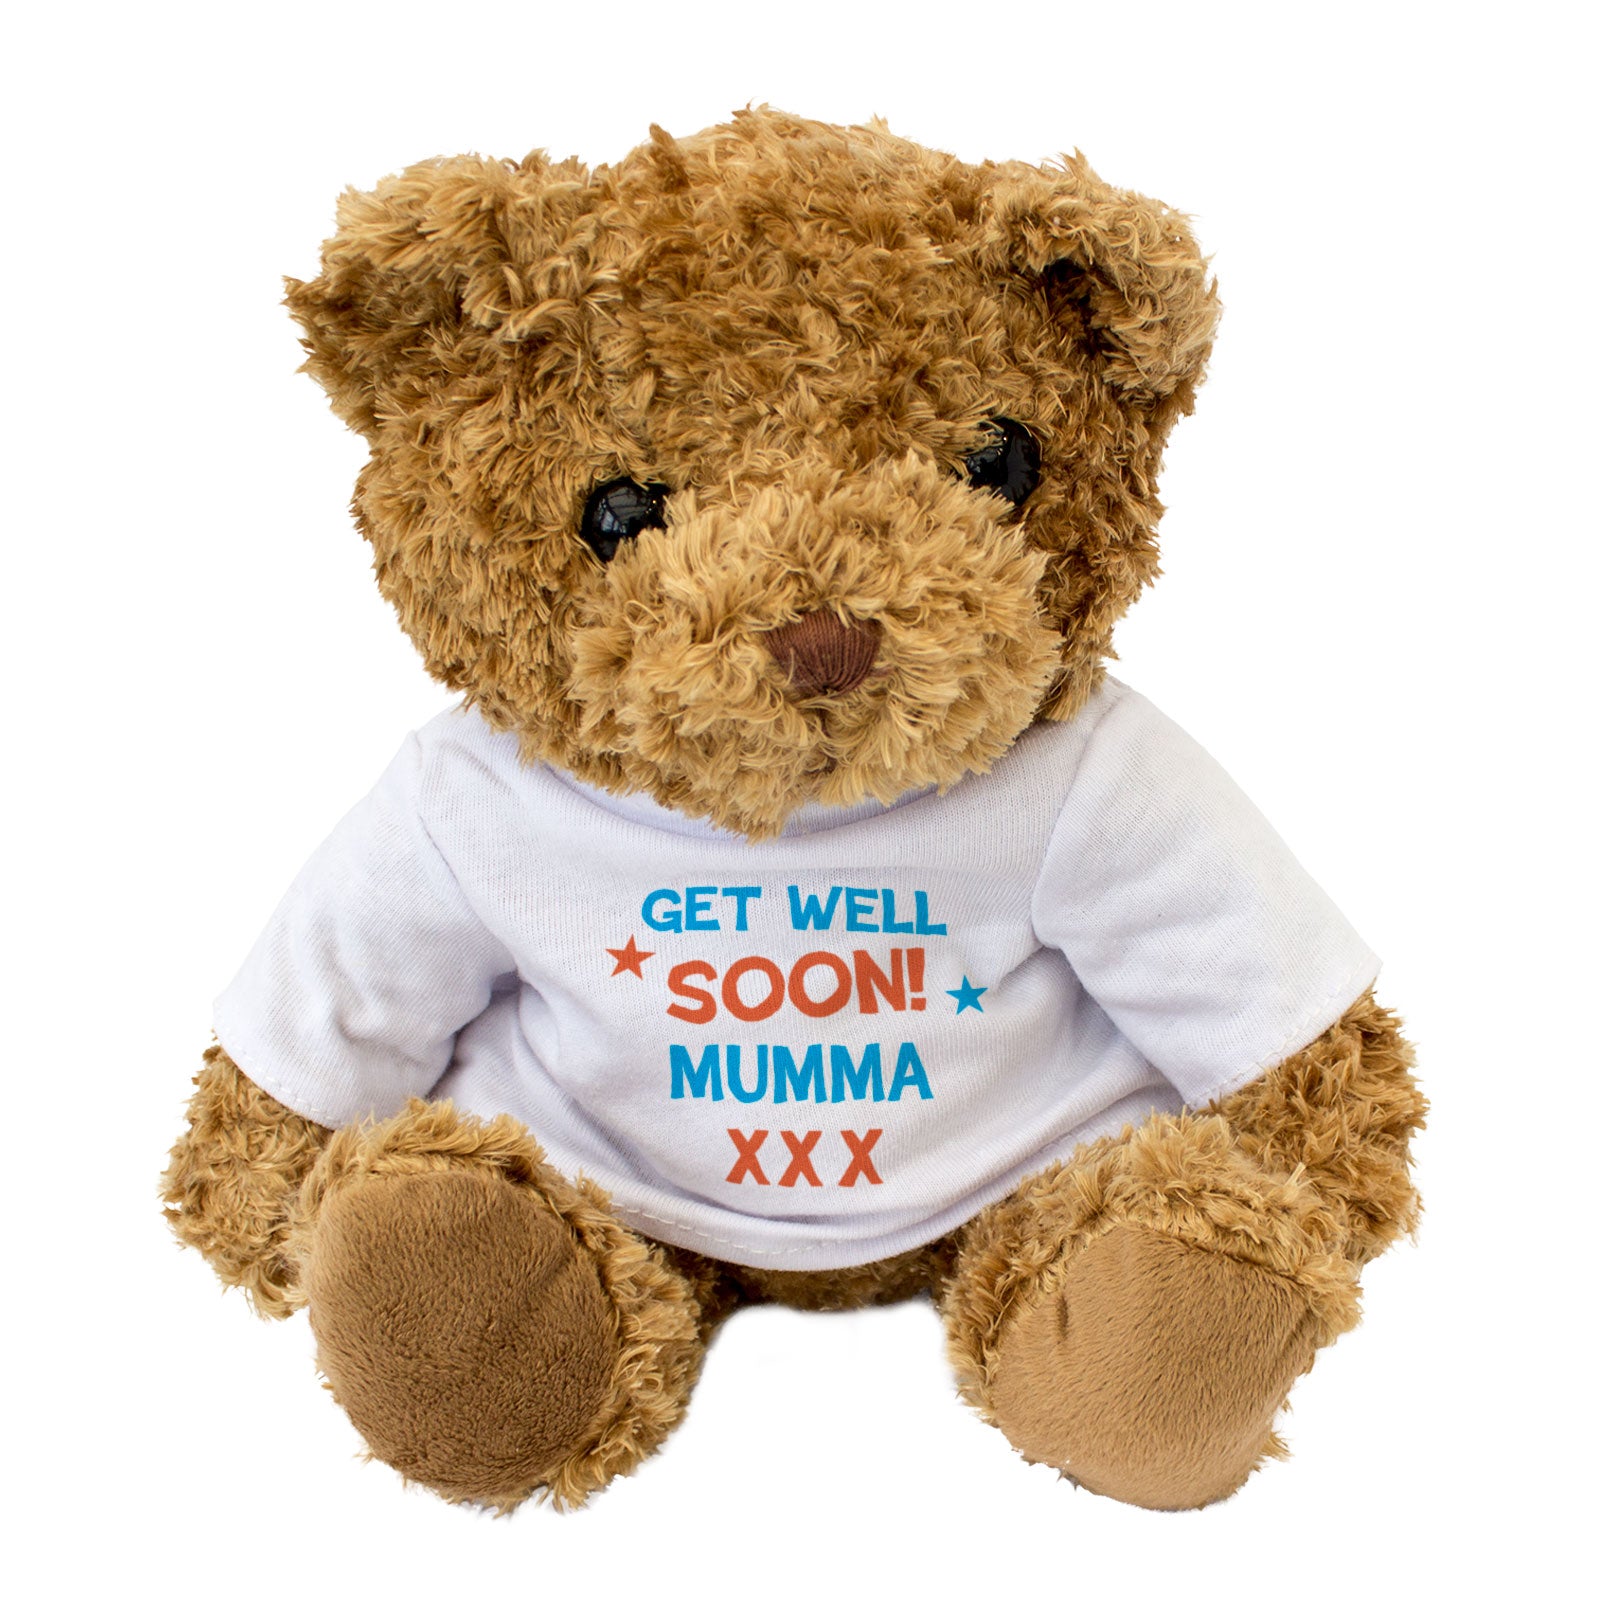 Get Well Soon Mumma - Teddy Bear